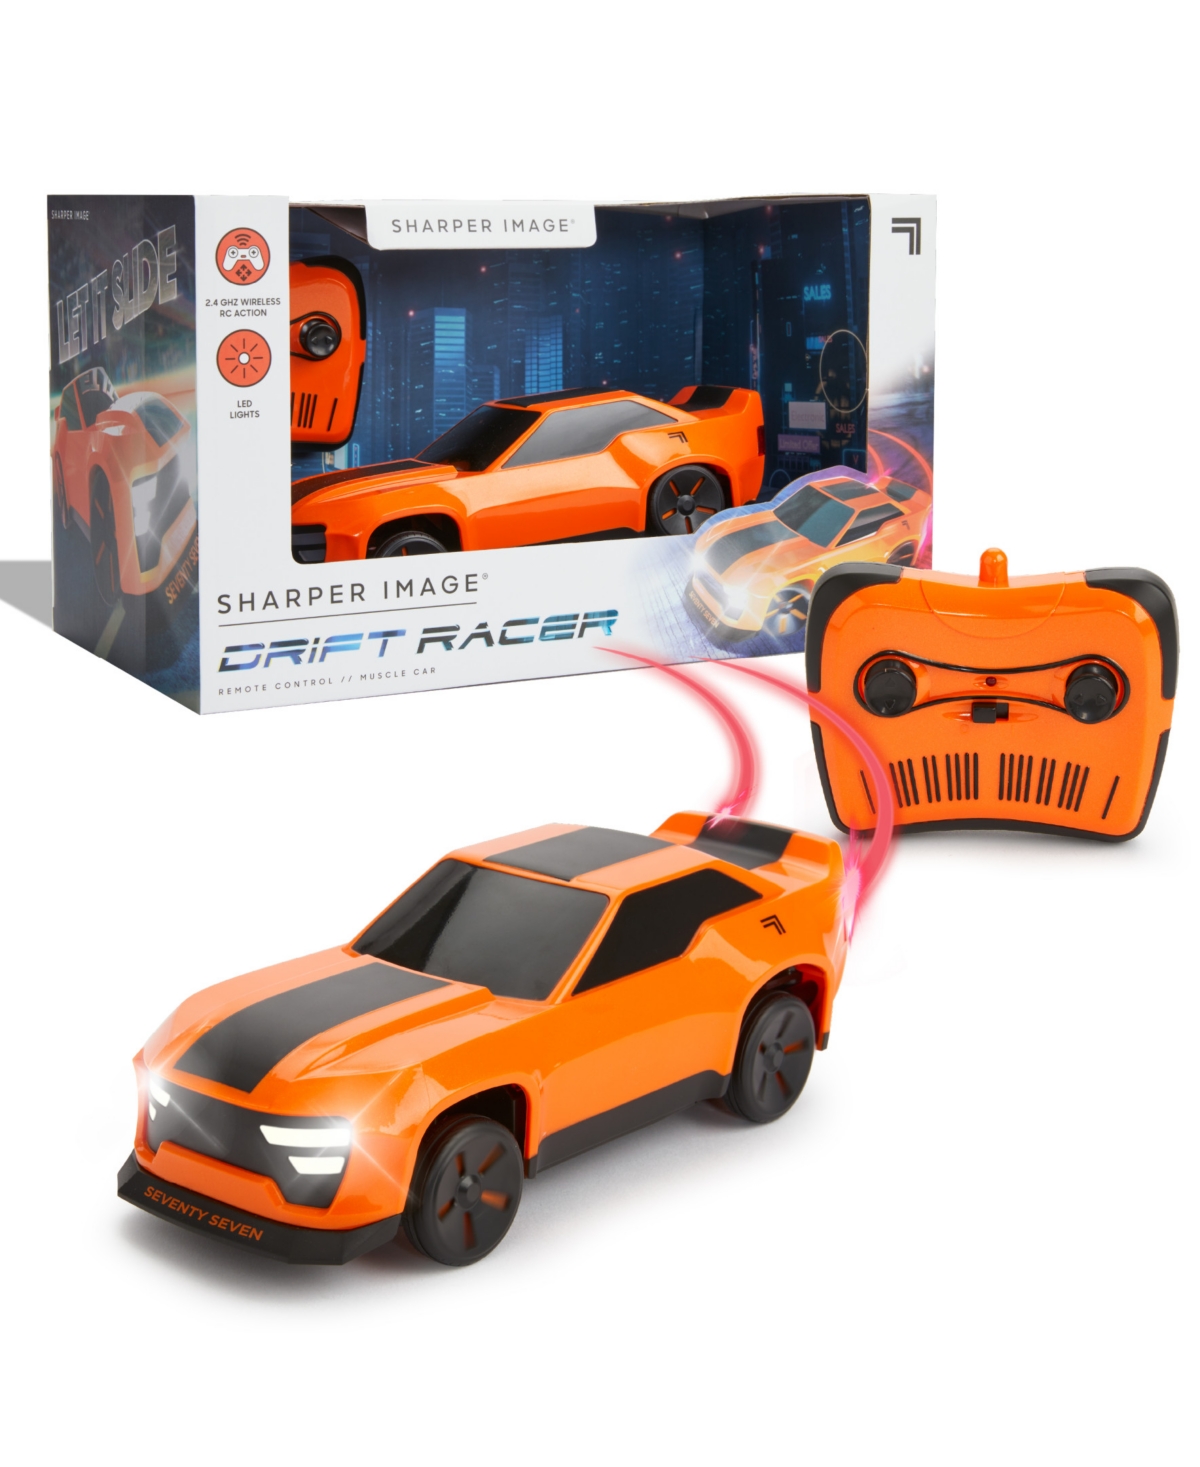 Sharper Image Kids' Toy Rc Drift Racer Muscle Car In Orange